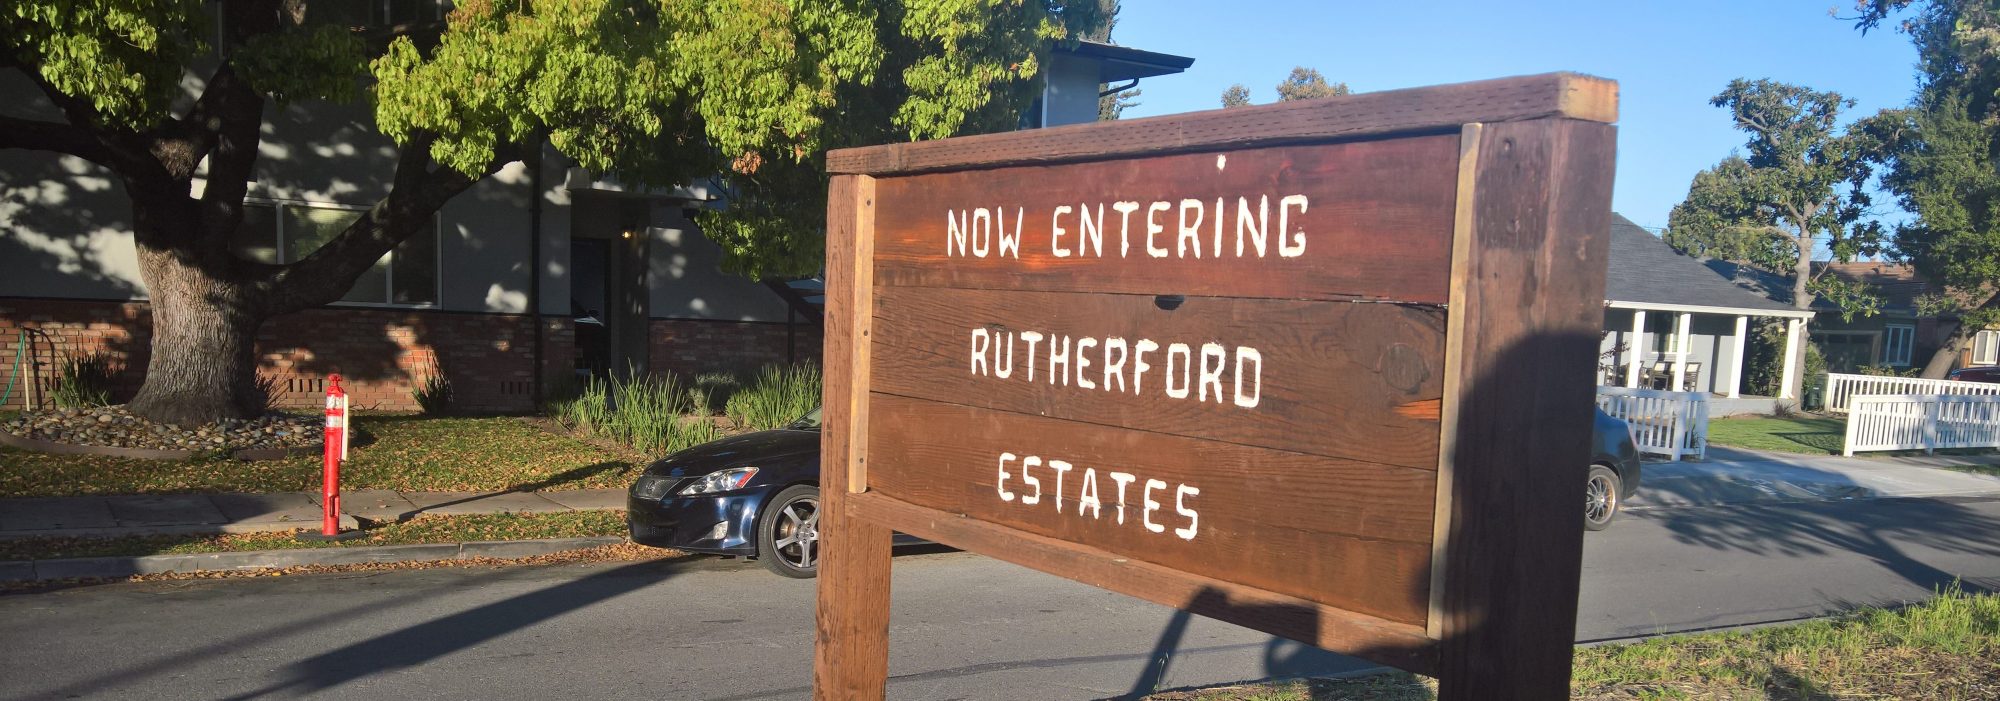 Rutherford Estates